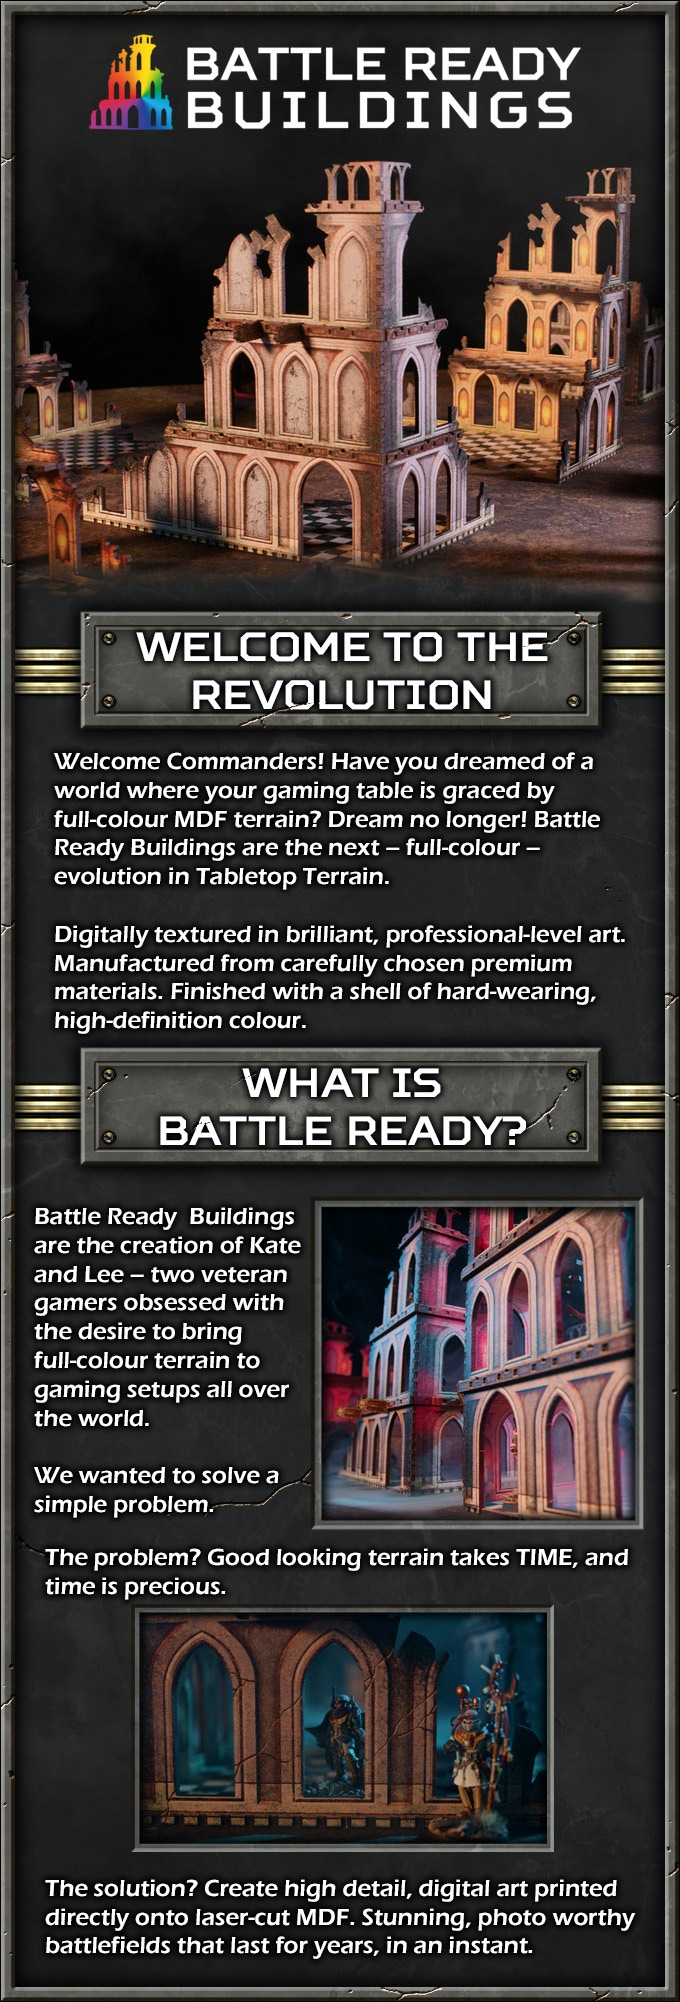 Battle Ready Buildings Kickstarter - Chromacut Studio